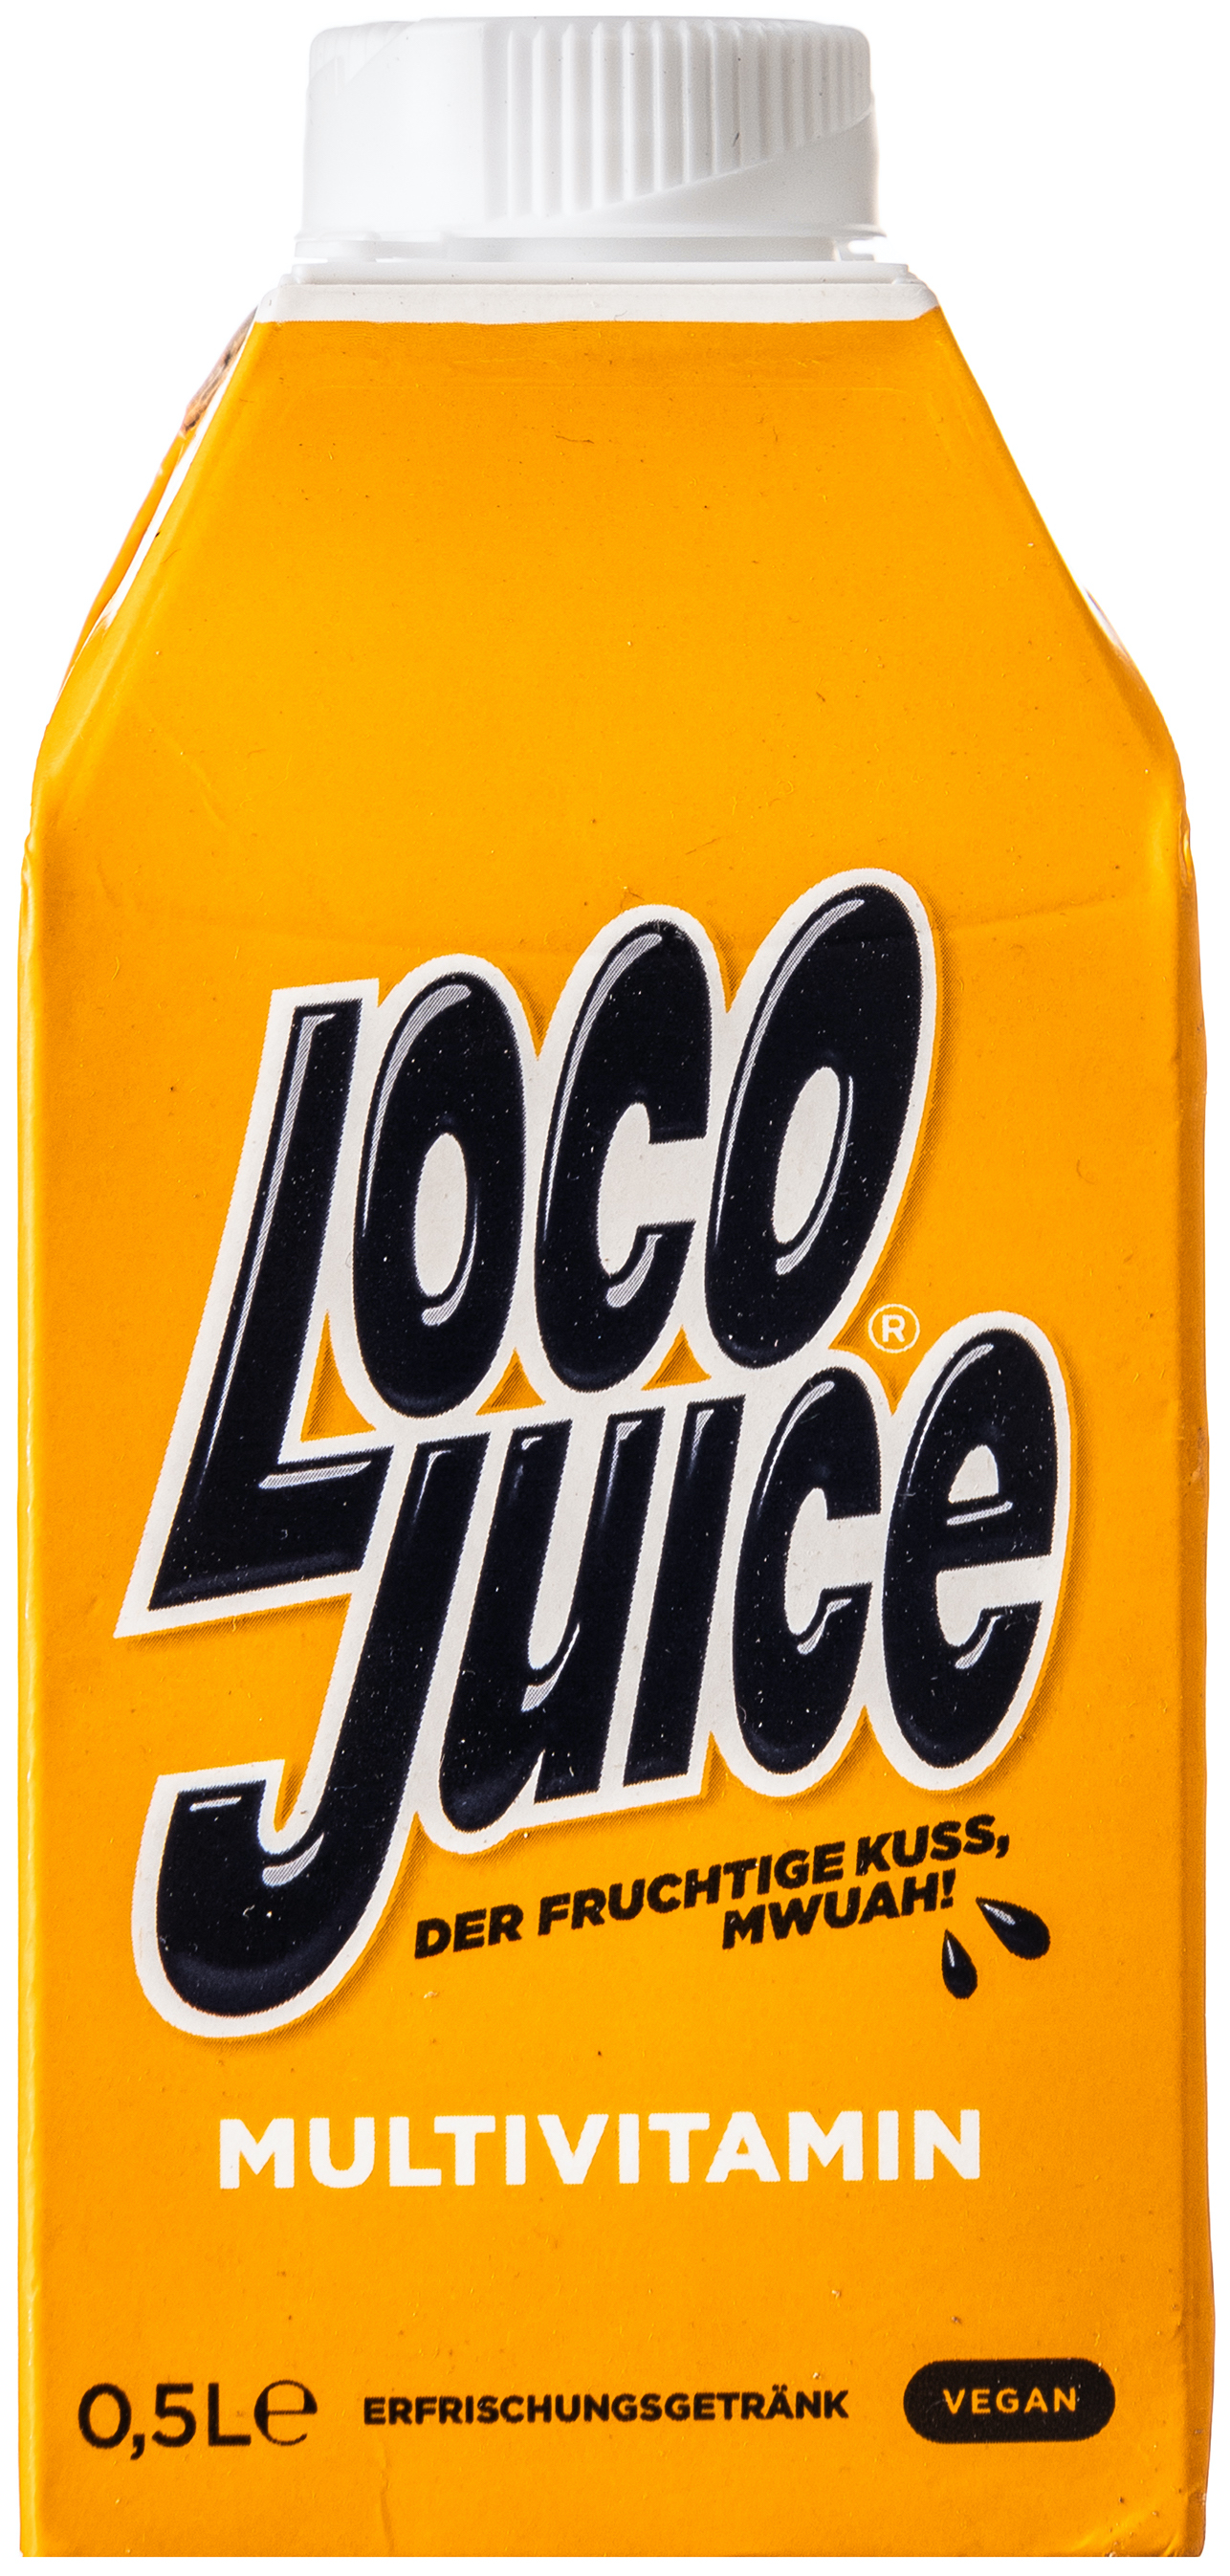 Loco Juice Multivitamin 0,5L